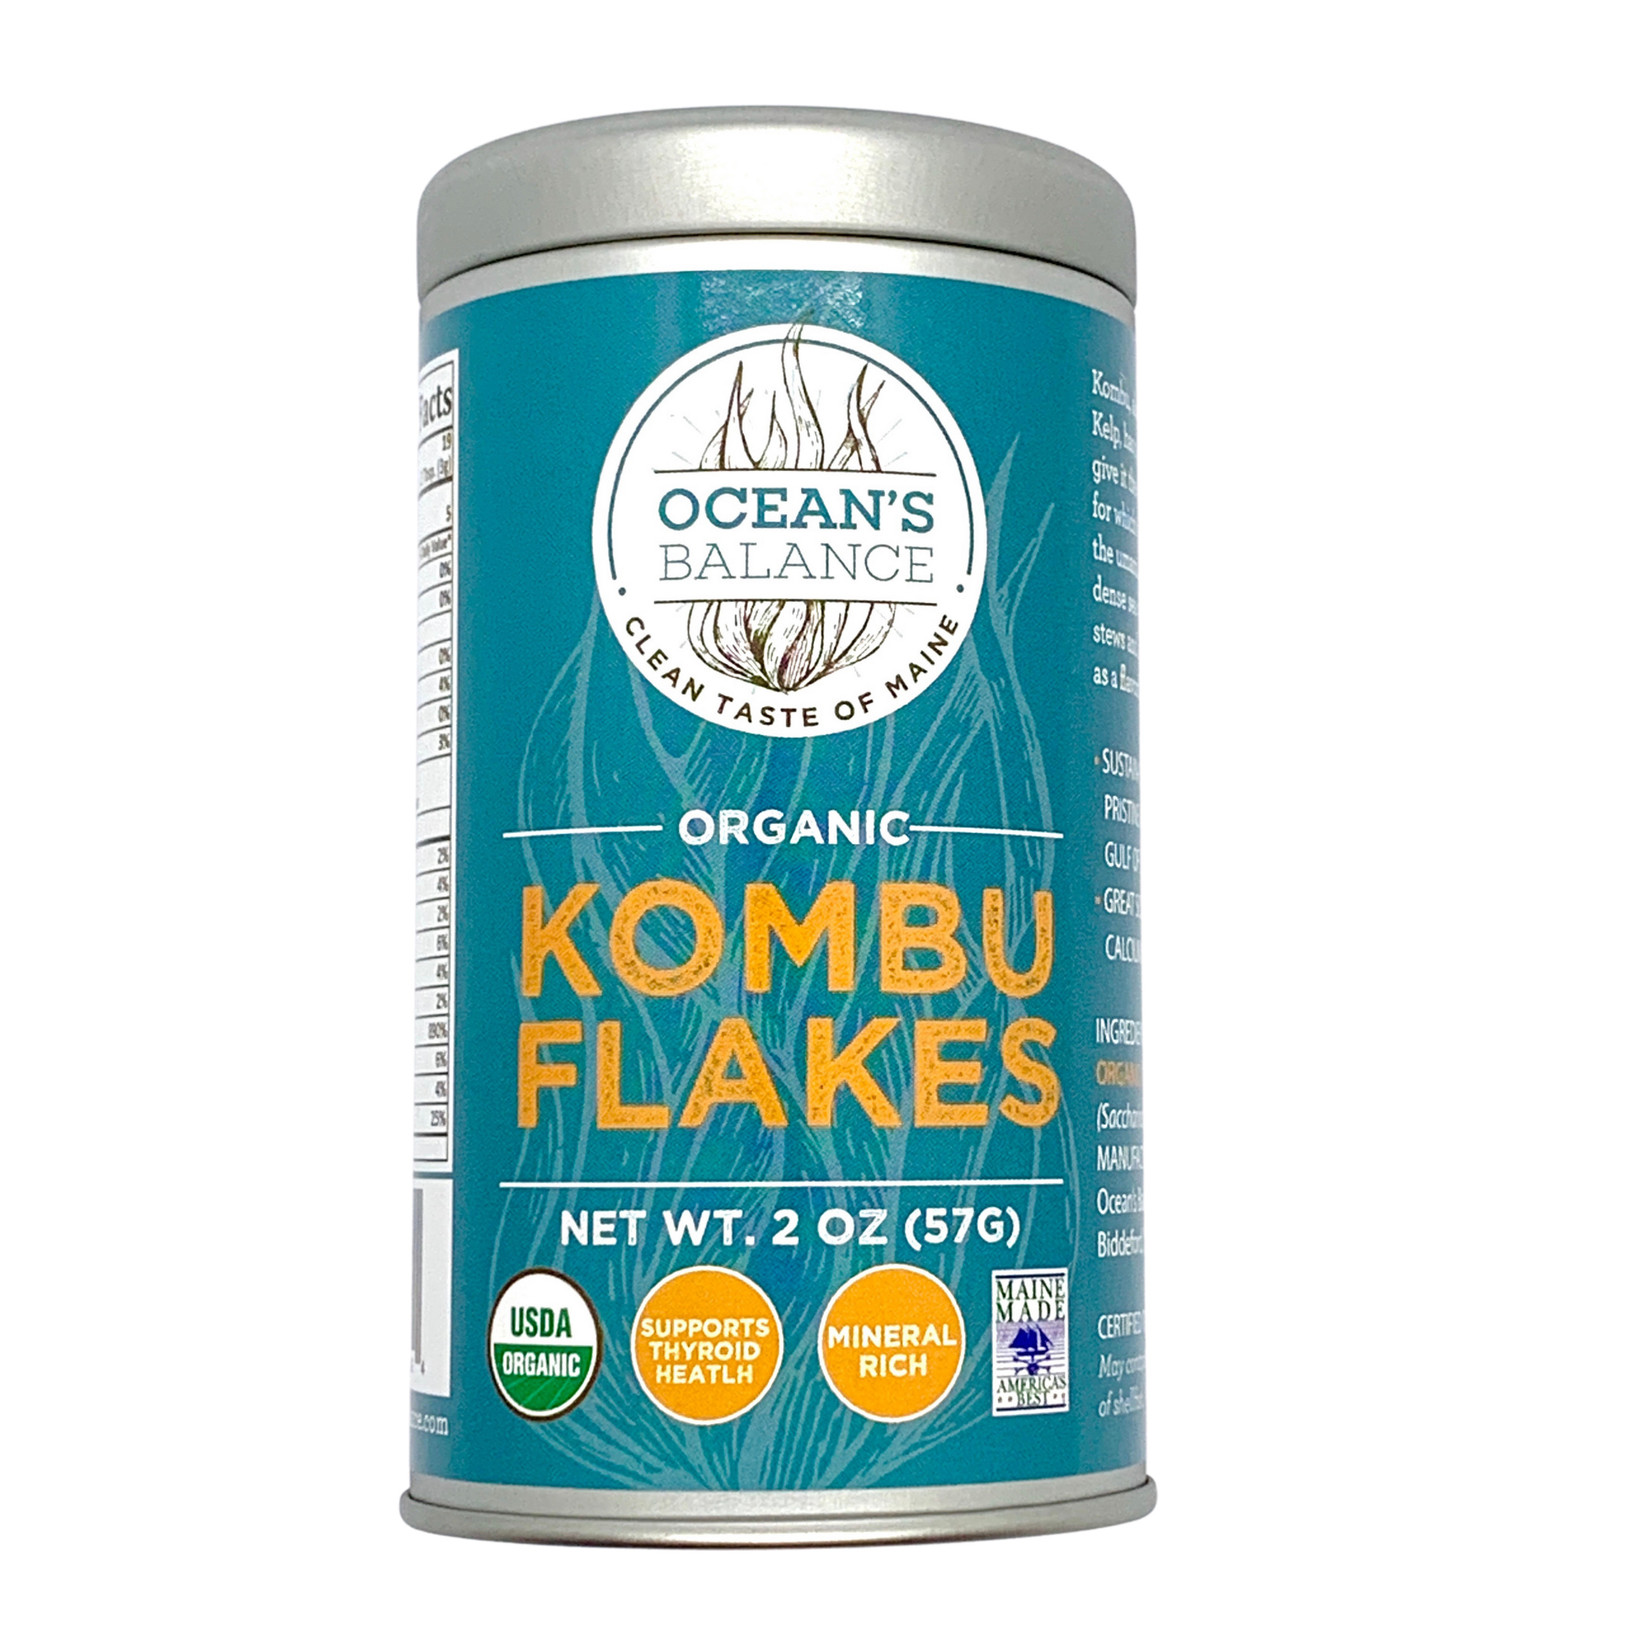 Ocean's Balance organic kombu flakes